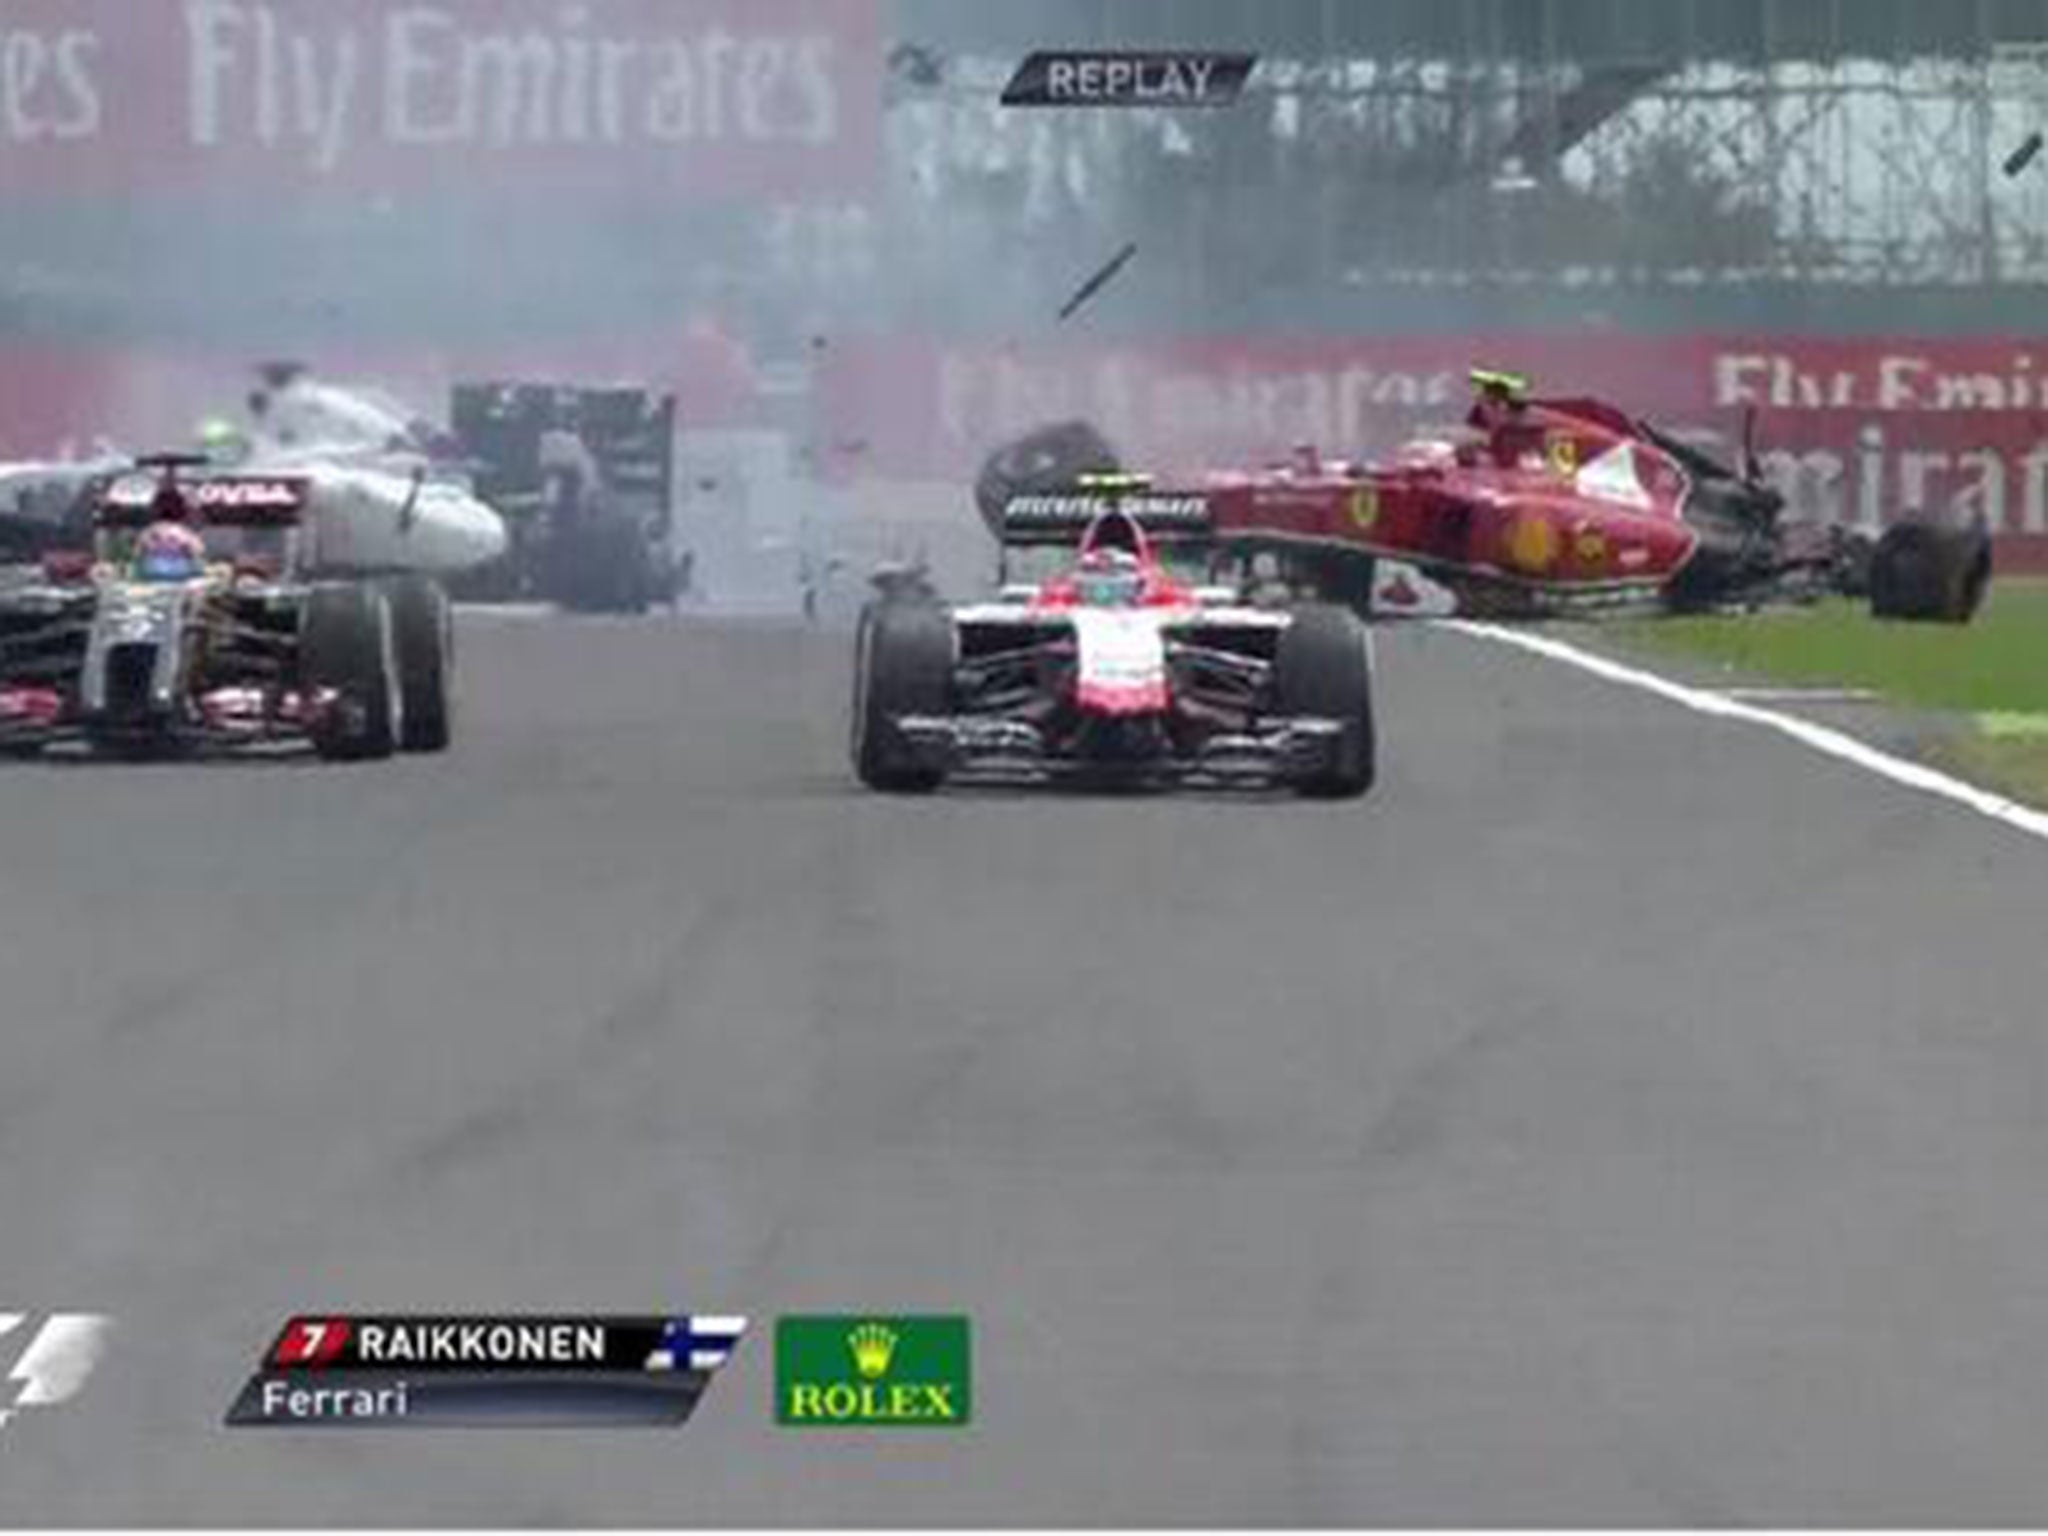 Kimi Raikkonen's heavily damaged Ferrari spins back on to the Silverstone track after hitting Felipe Massa